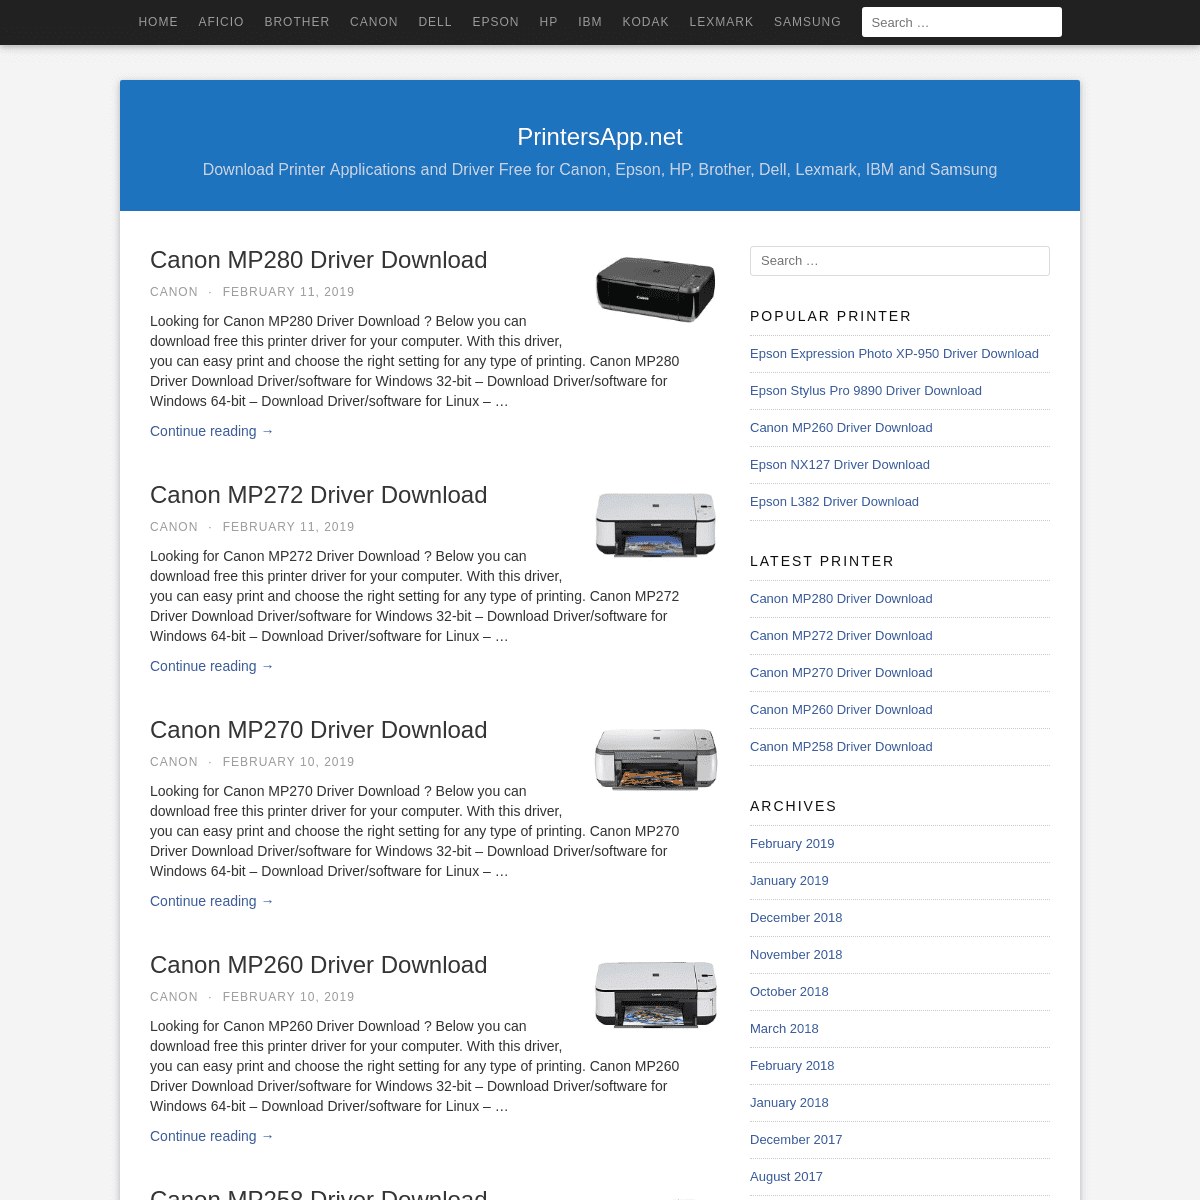 A complete backup of printersapp.net